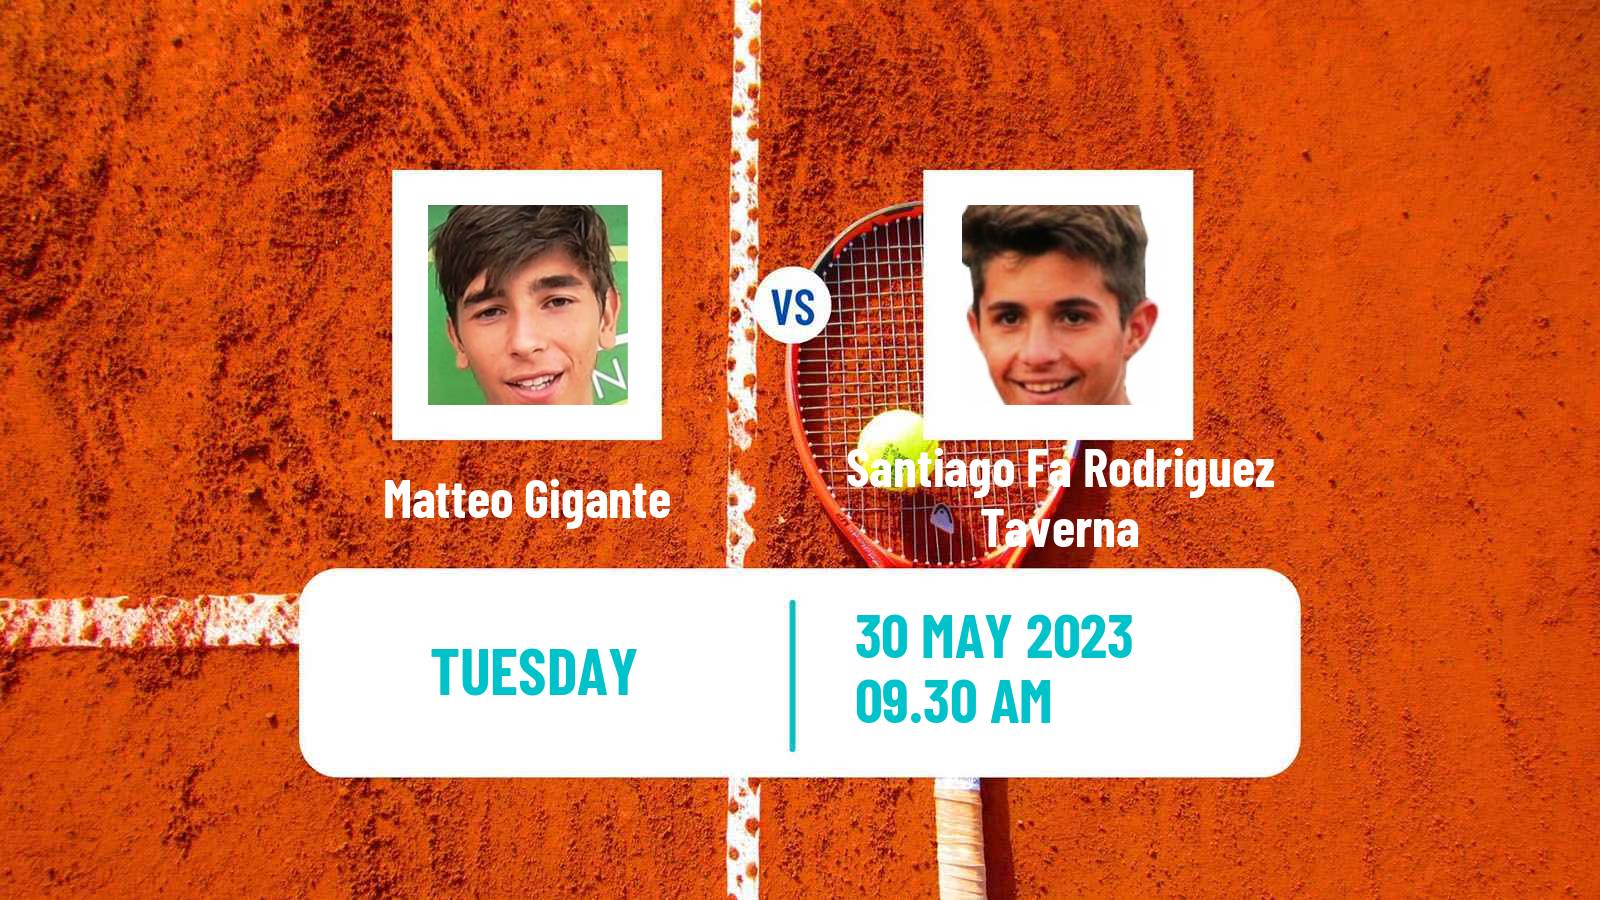 Tennis Vicenza Challenger Men Matteo Gigante - Santiago Fa Rodriguez Taverna